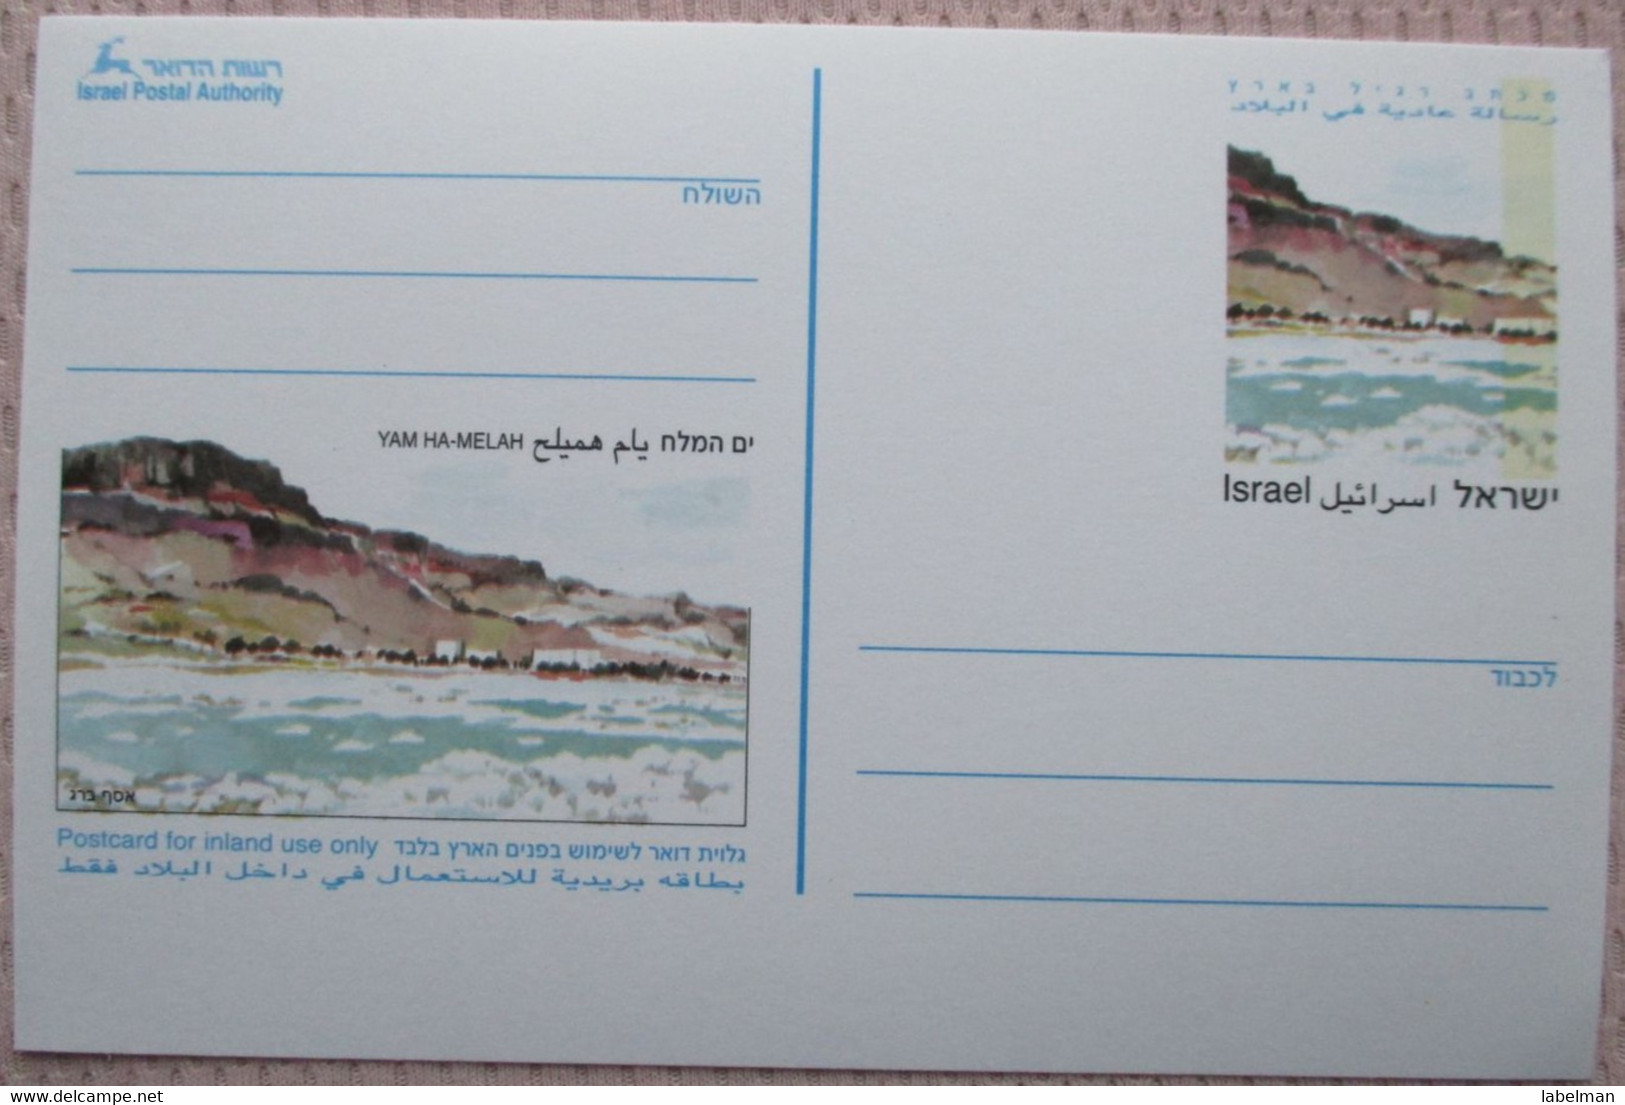 ISRAEL POSTAL AUTHORITY DEAD SEA DESERT INLAND PREPAID POSTCARD POSTKARTE CARD ANSICHTSKARTE CARTOLINA CARTE POSTALE PC - Maximum Cards